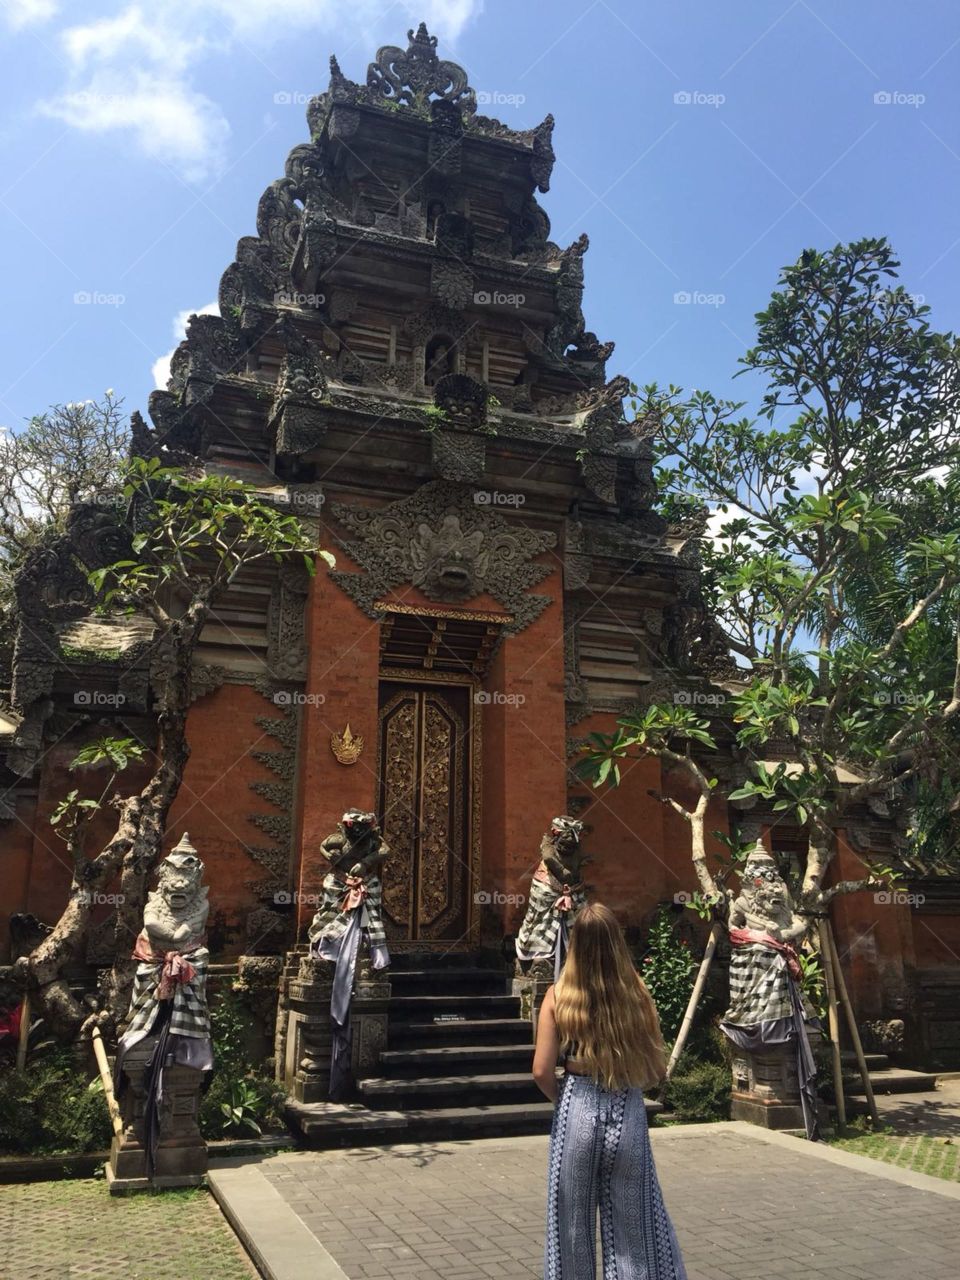 Indonesia Temple ubud amazing architecture 